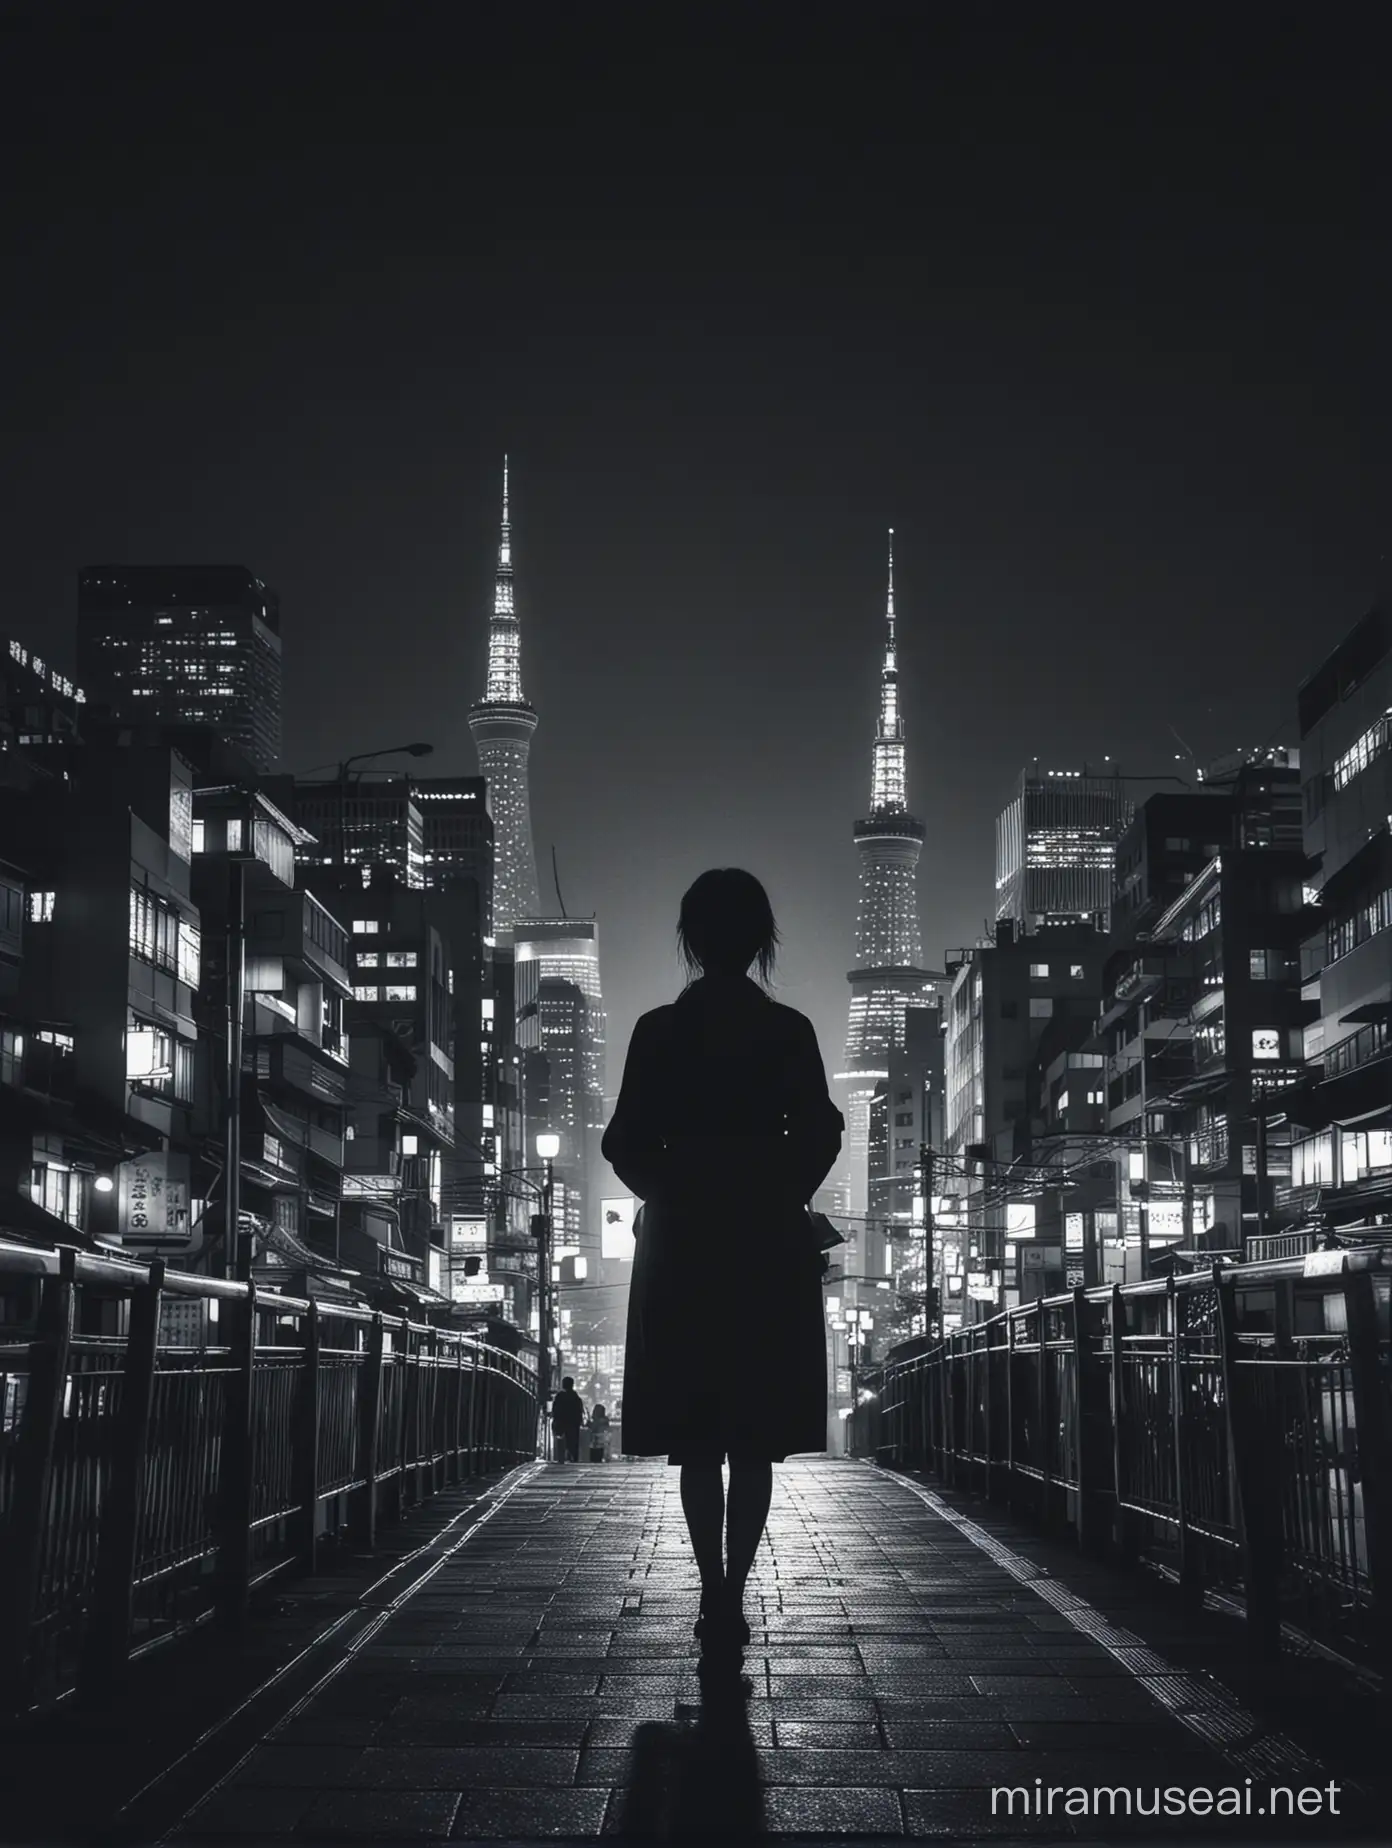 Urban Night Serene Silhouette of a Japanese Woman